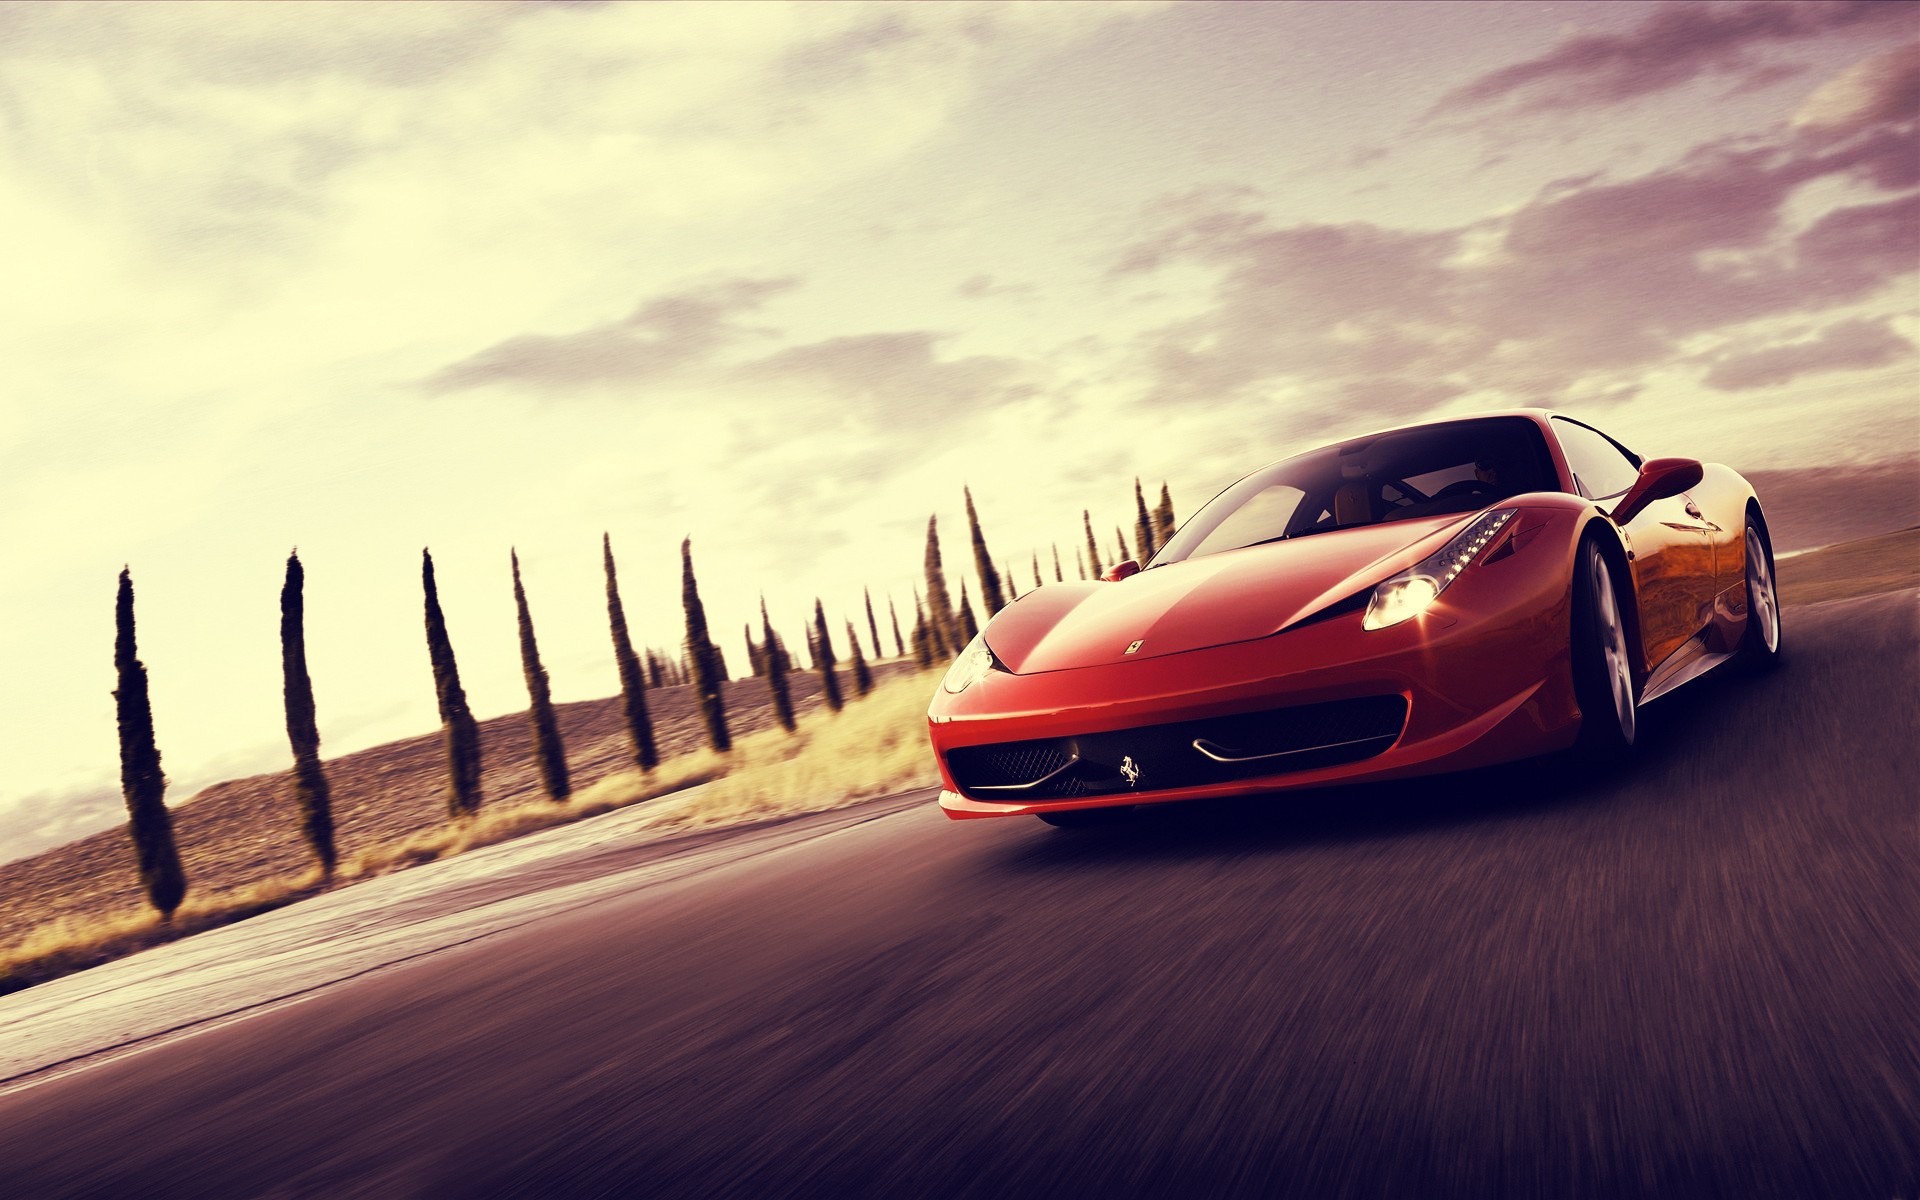 A sleek red Ferrari 458 parked against a scenic backdrop, making it a perfect desktop wallpaper.